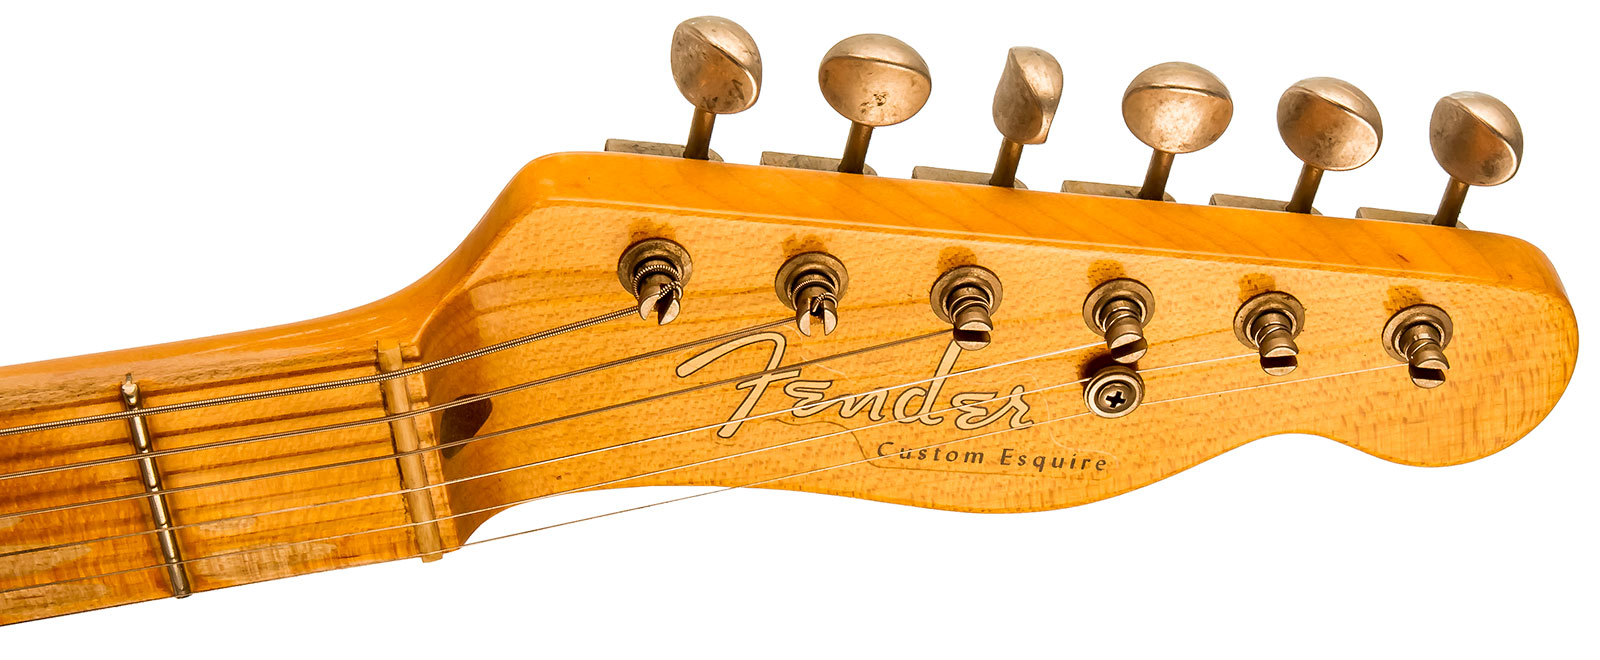 Fender Custom Shop Double Esquire/tele Custom 2s Ht Mn #r97434 - Journeyman Relic Aged Pink Paisley - Semi hollow elektriche gitaar - Variation 5